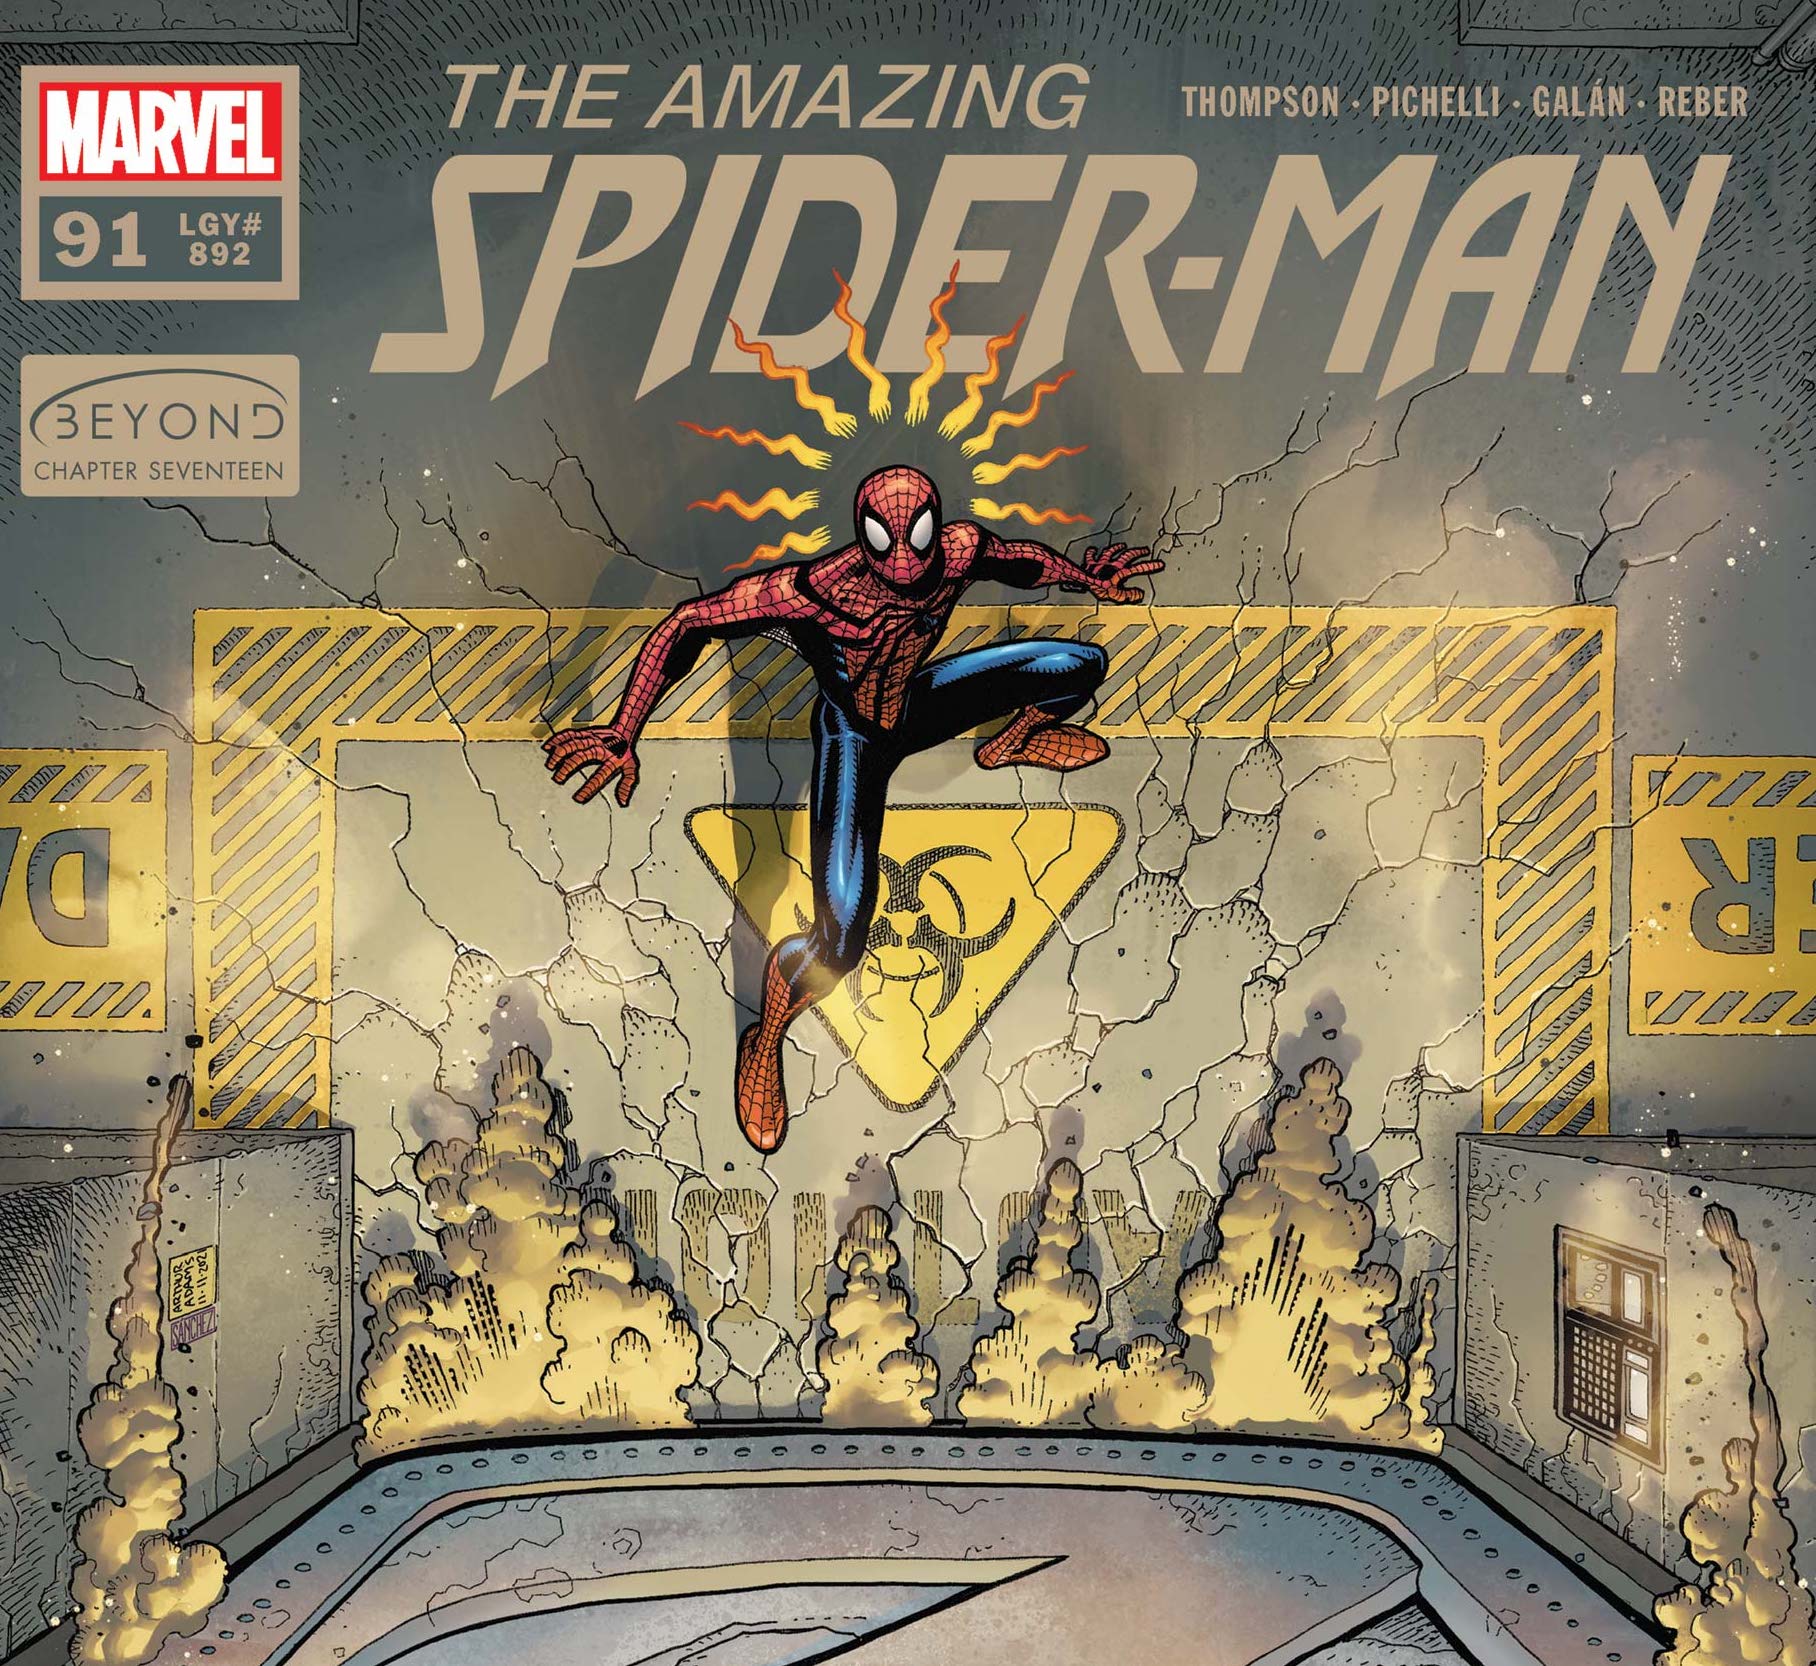 'Amazing Spider-Man' #91 mixes Ben's trauma with kooky villains